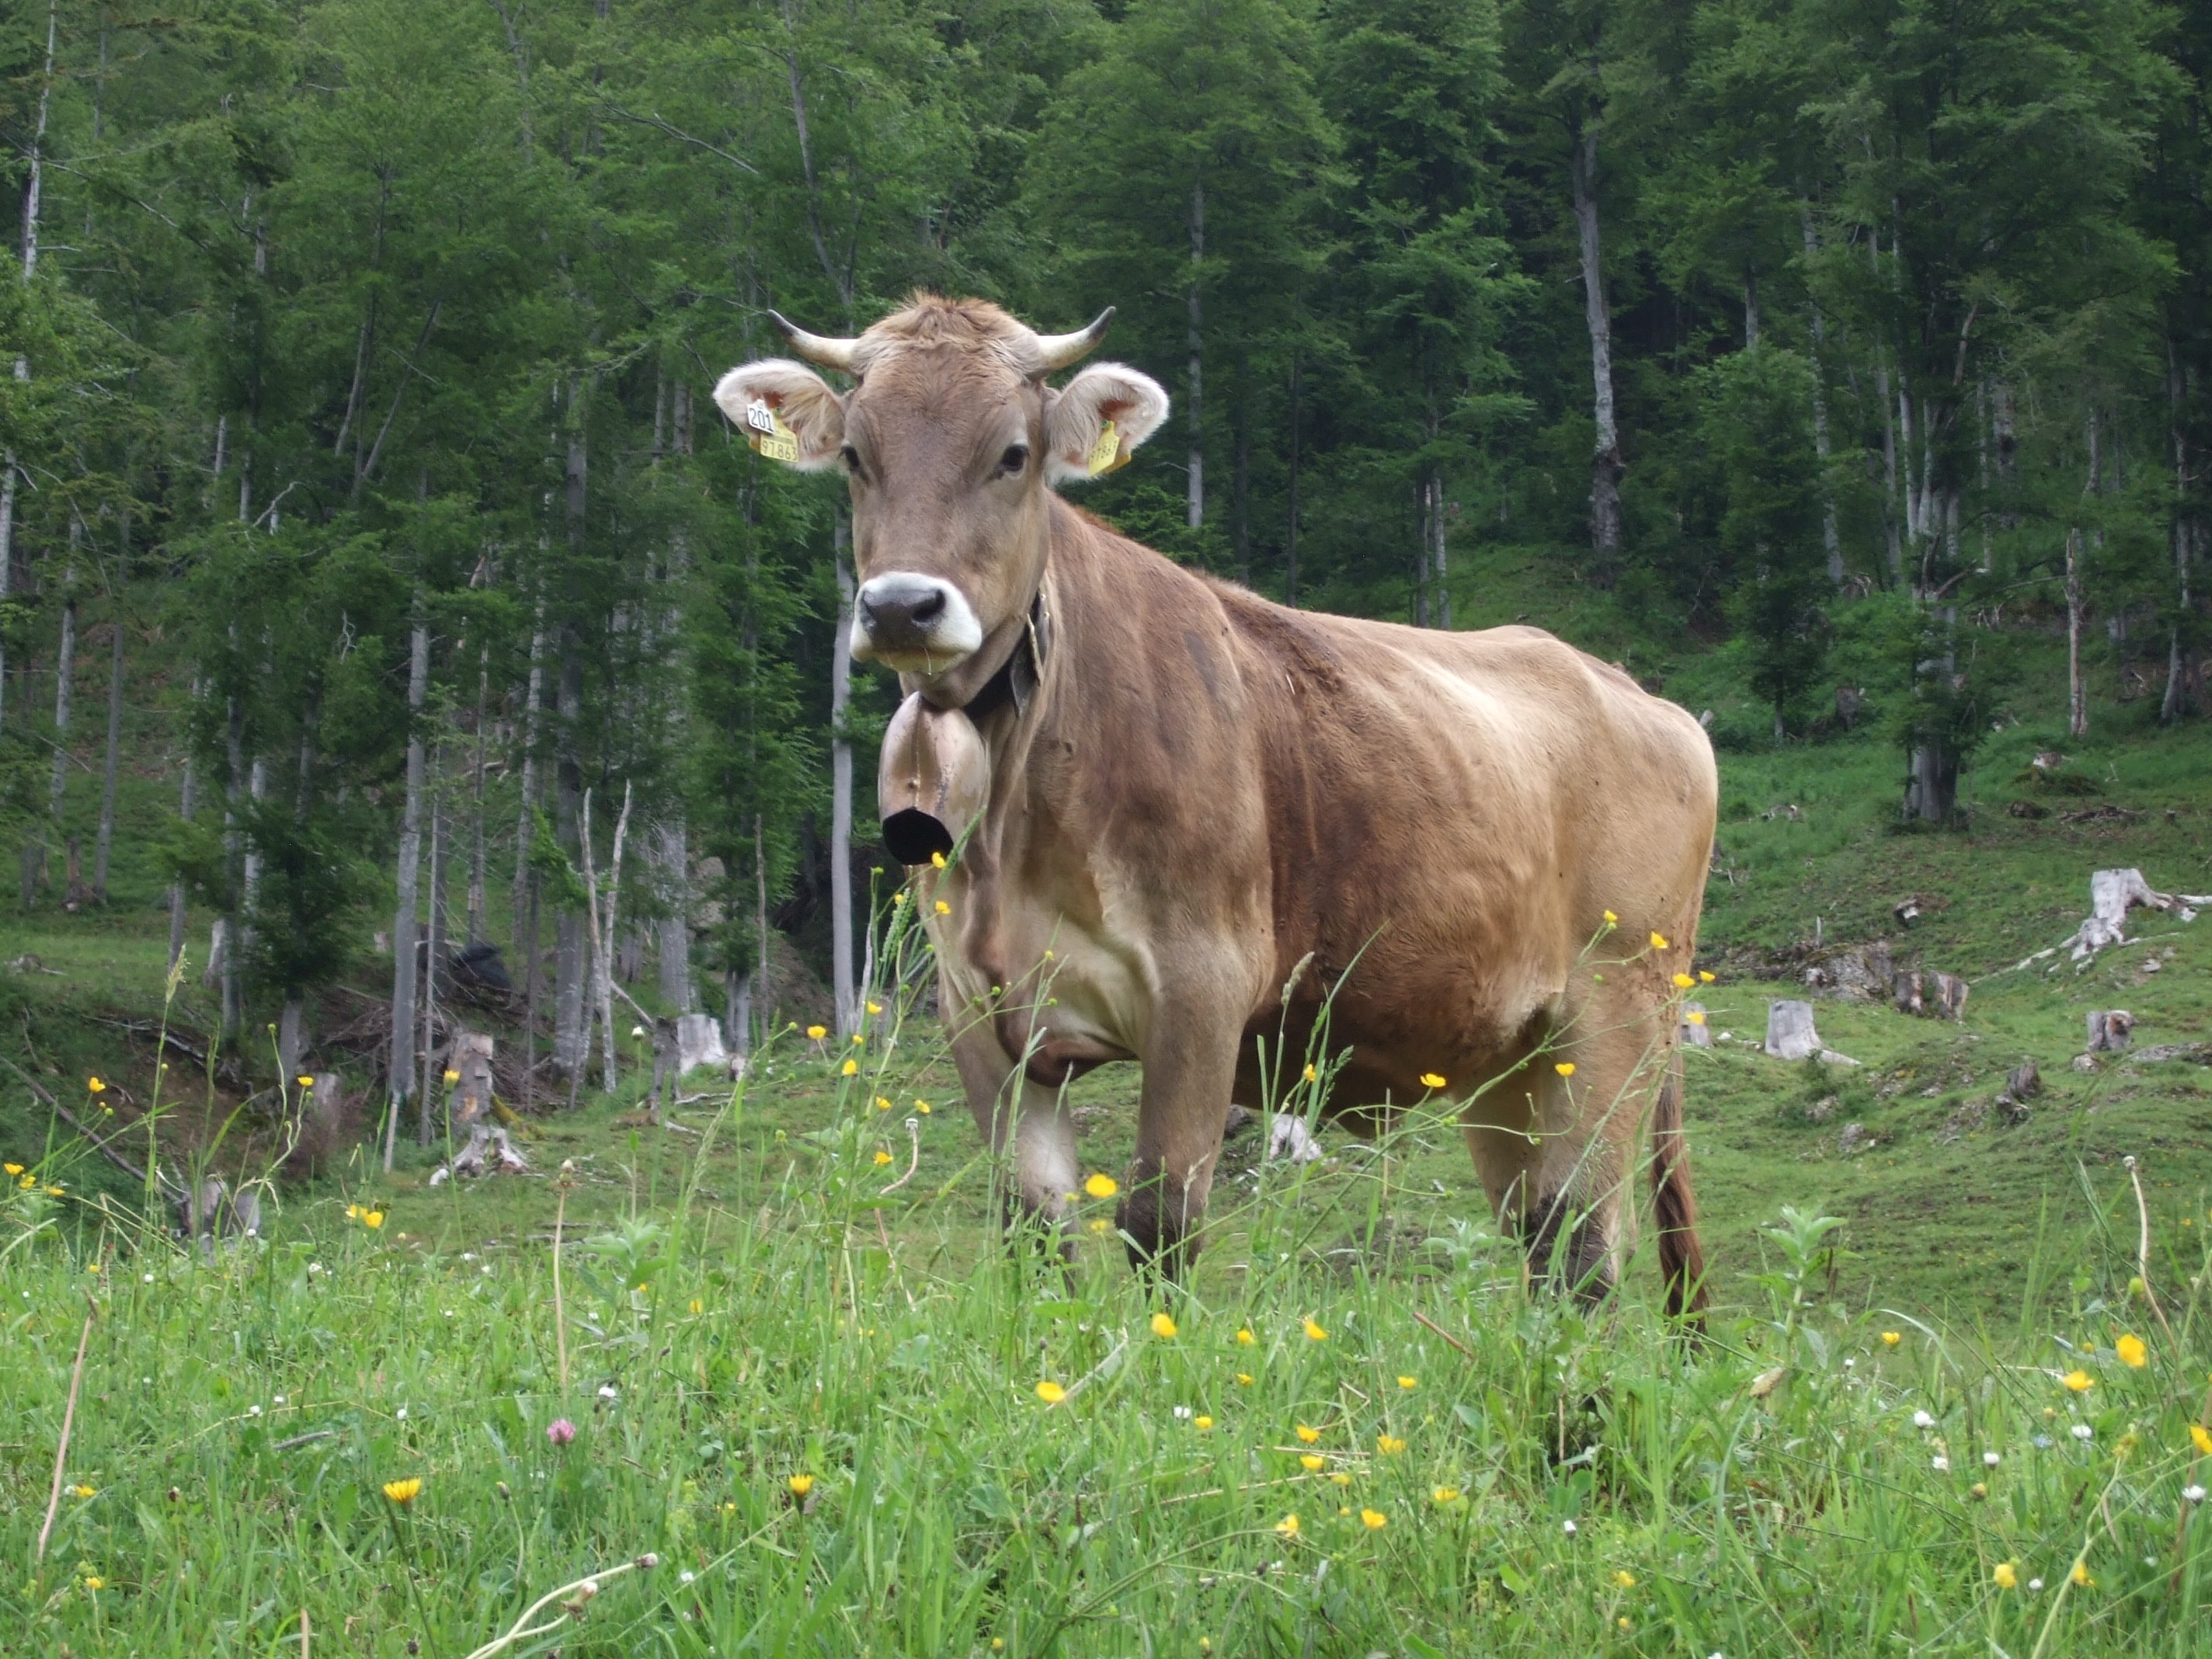 brown land cattle on grass field